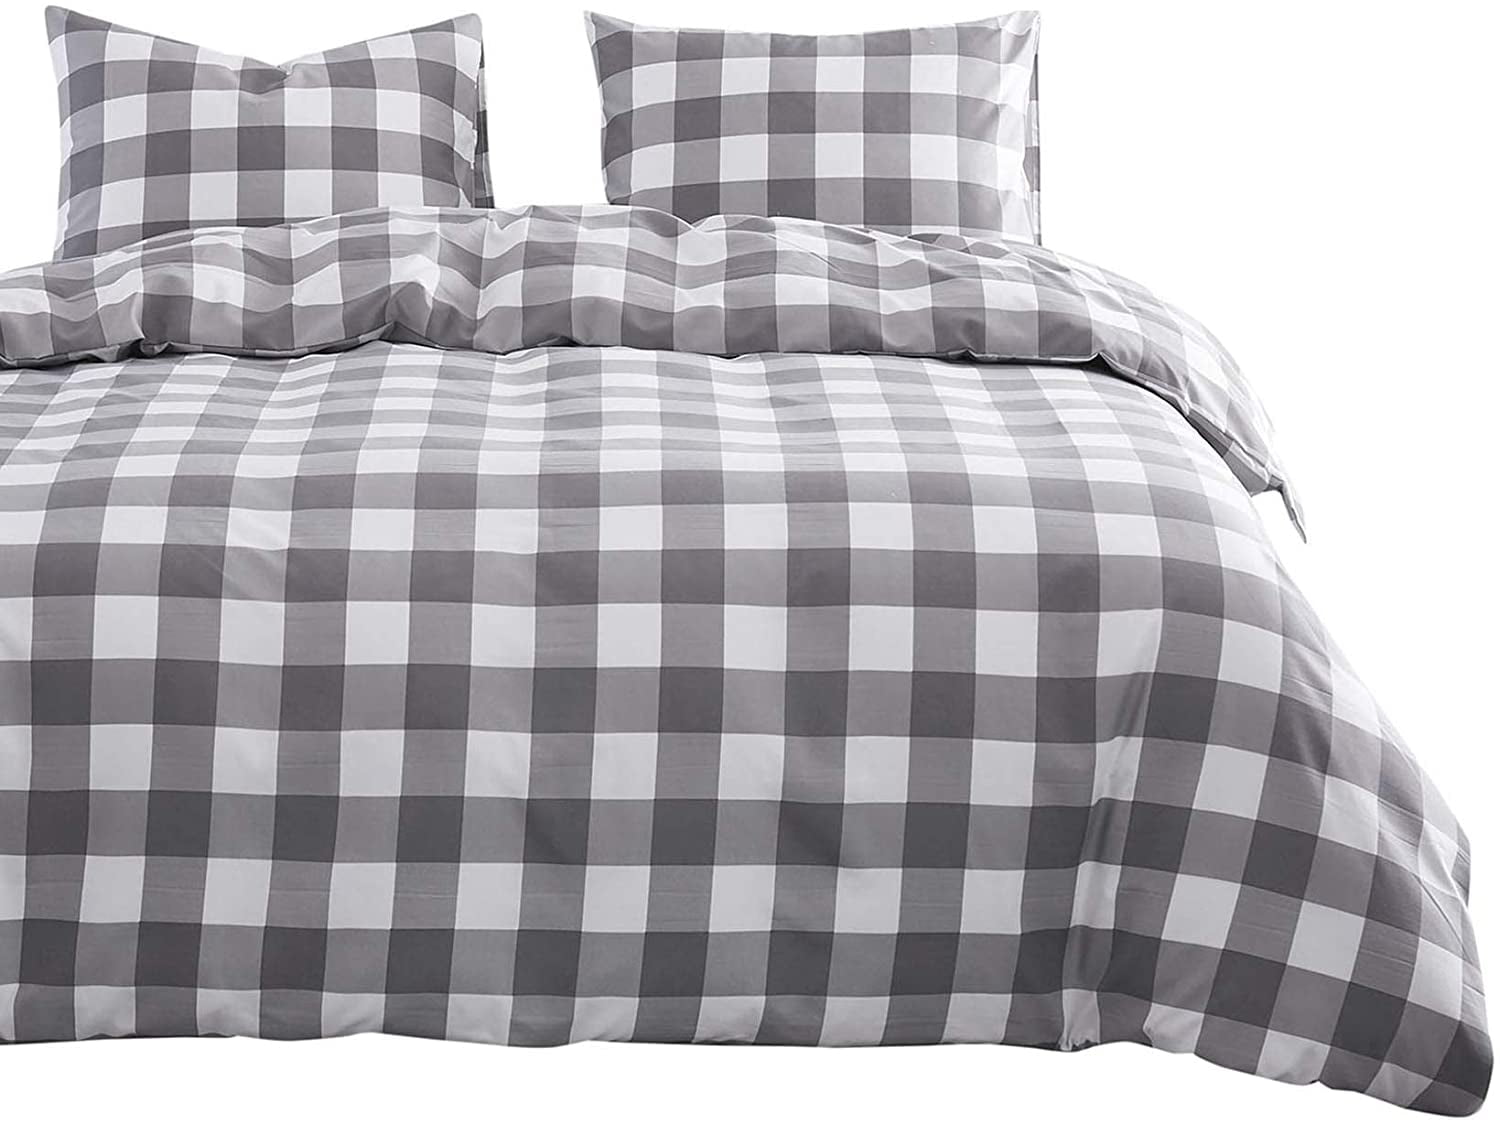 Details about   Comforter Set Gray Grey Check Plaid Geometric 